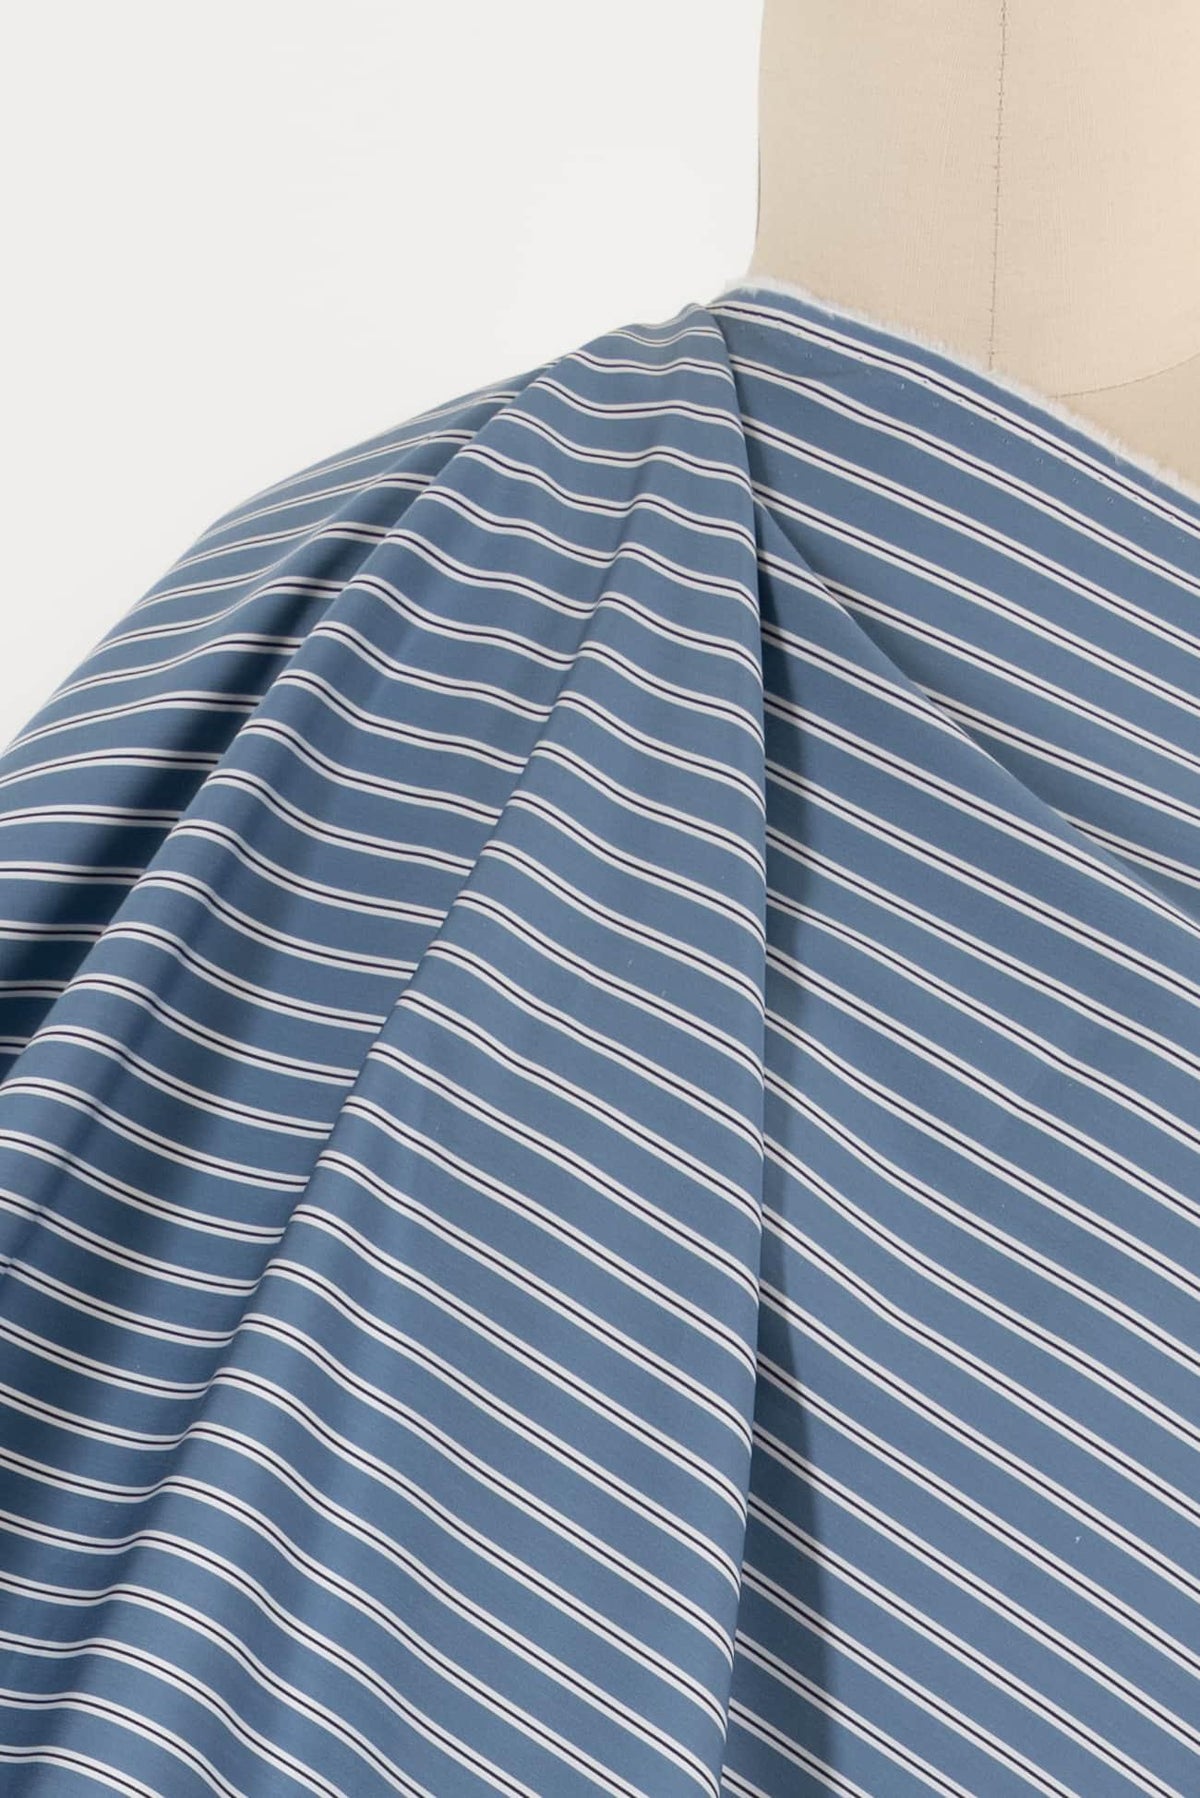 Bodega Bay Stripe Cotton Woven - Marcy Tilton Fabrics